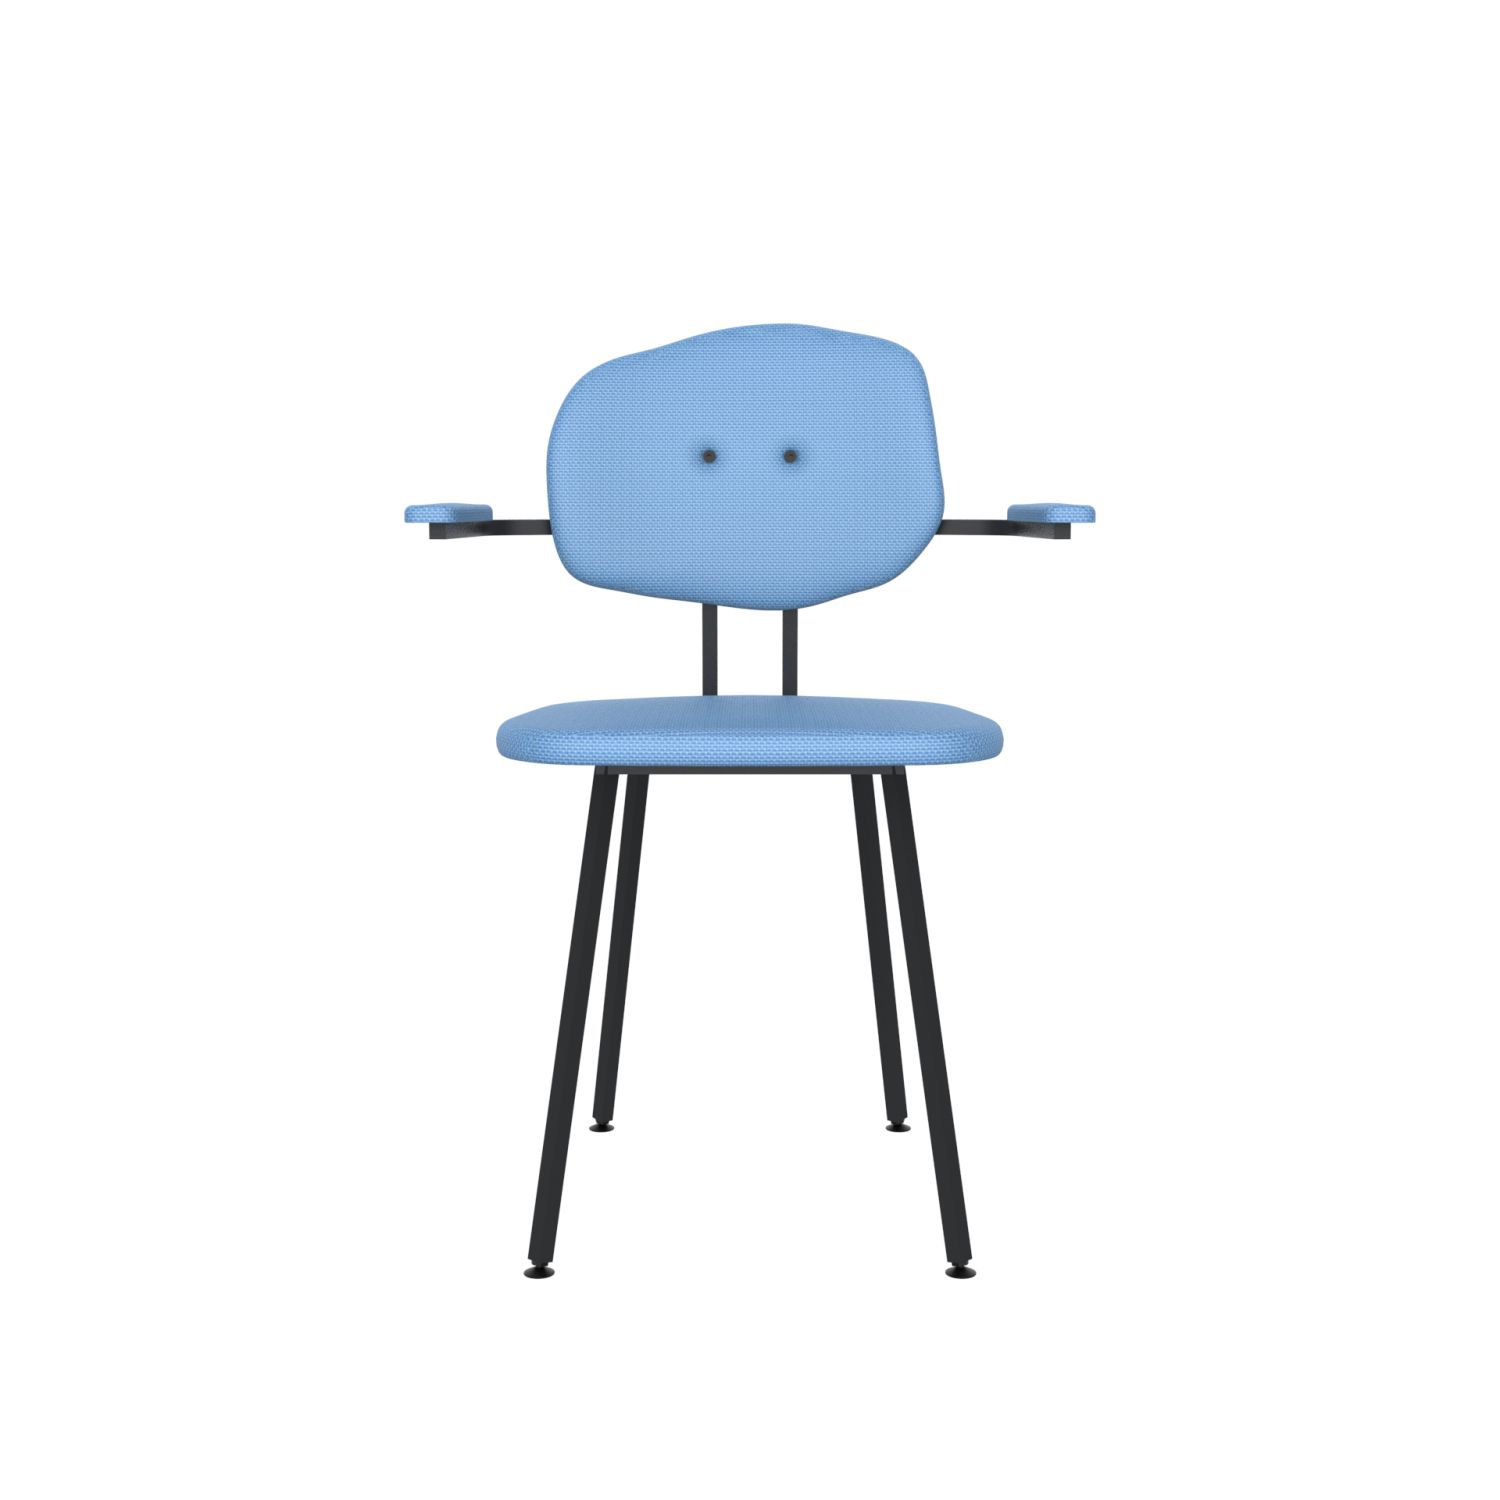 lensvelt maarten baas chair 102 not stackable with armrests backrest e blue horizon 040 black ral9005 hard leg ends